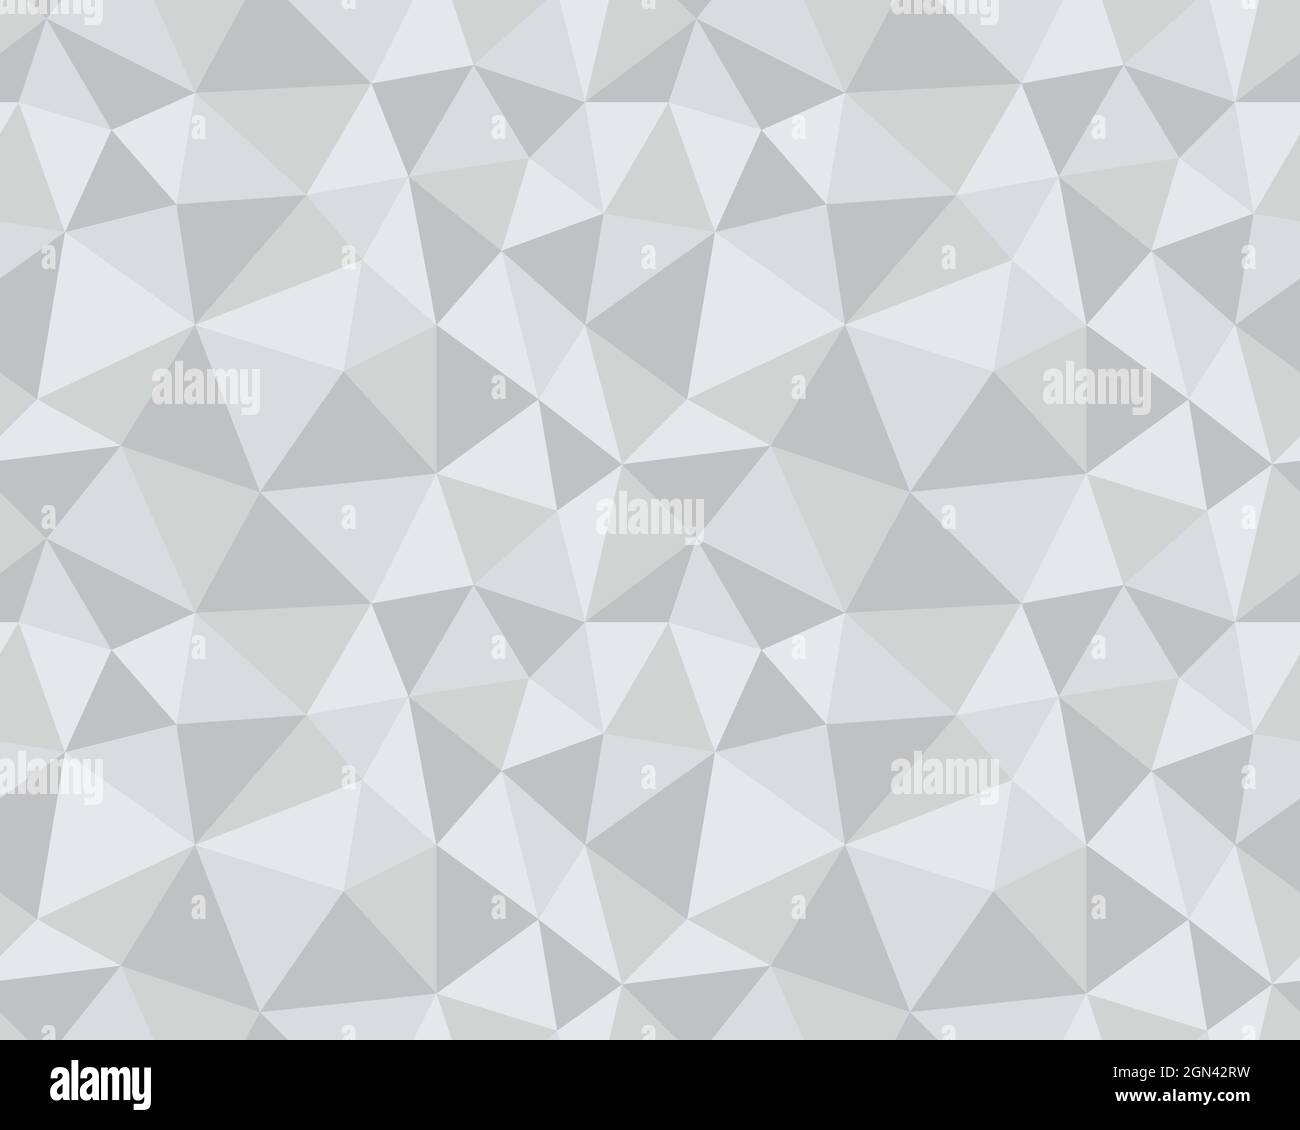 Seamless polygonal pattern background, creative design templates Stock Photo